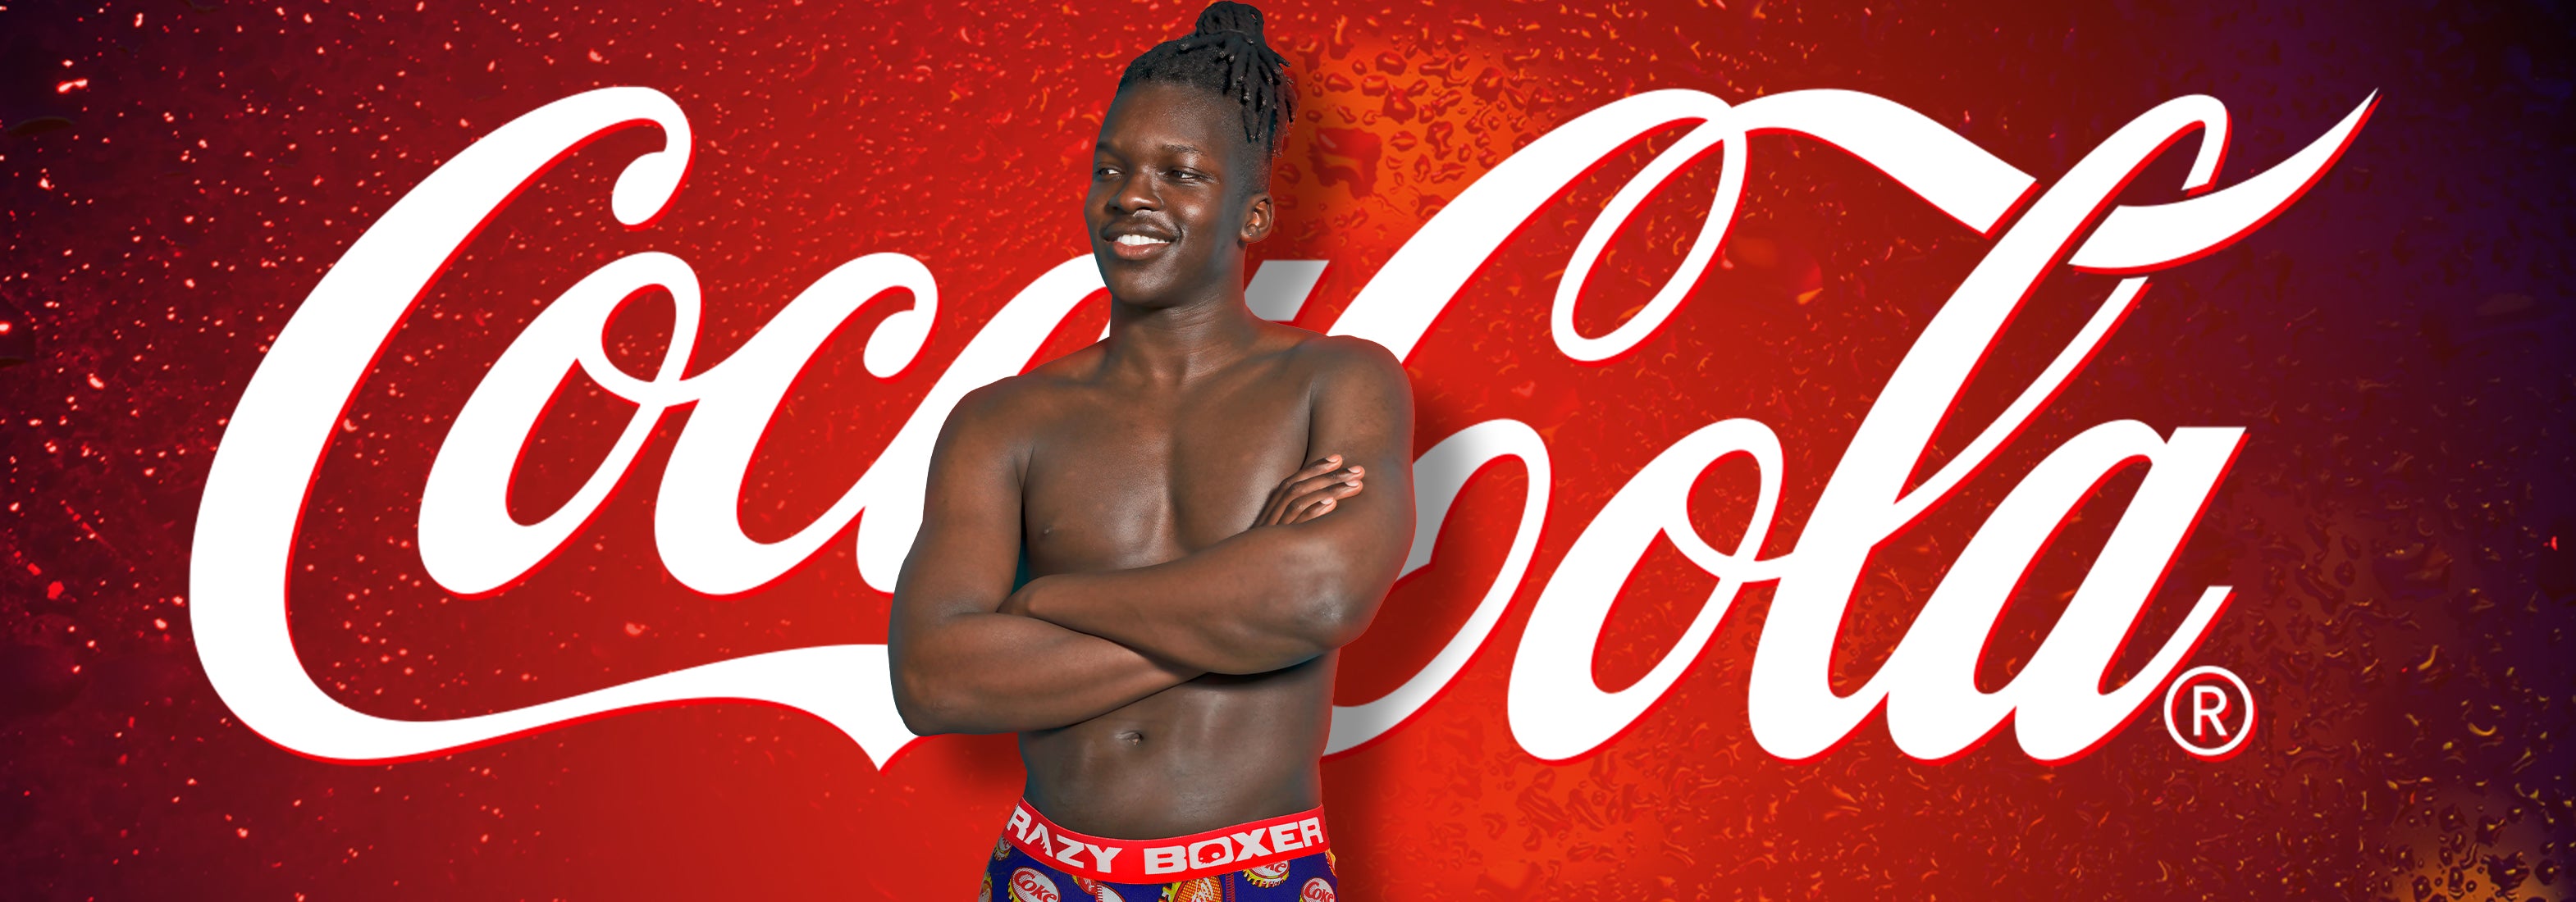 Buy Coca-Cola Bottle Caps Men's Crazy Boxer Briefs Small (28-30) Online